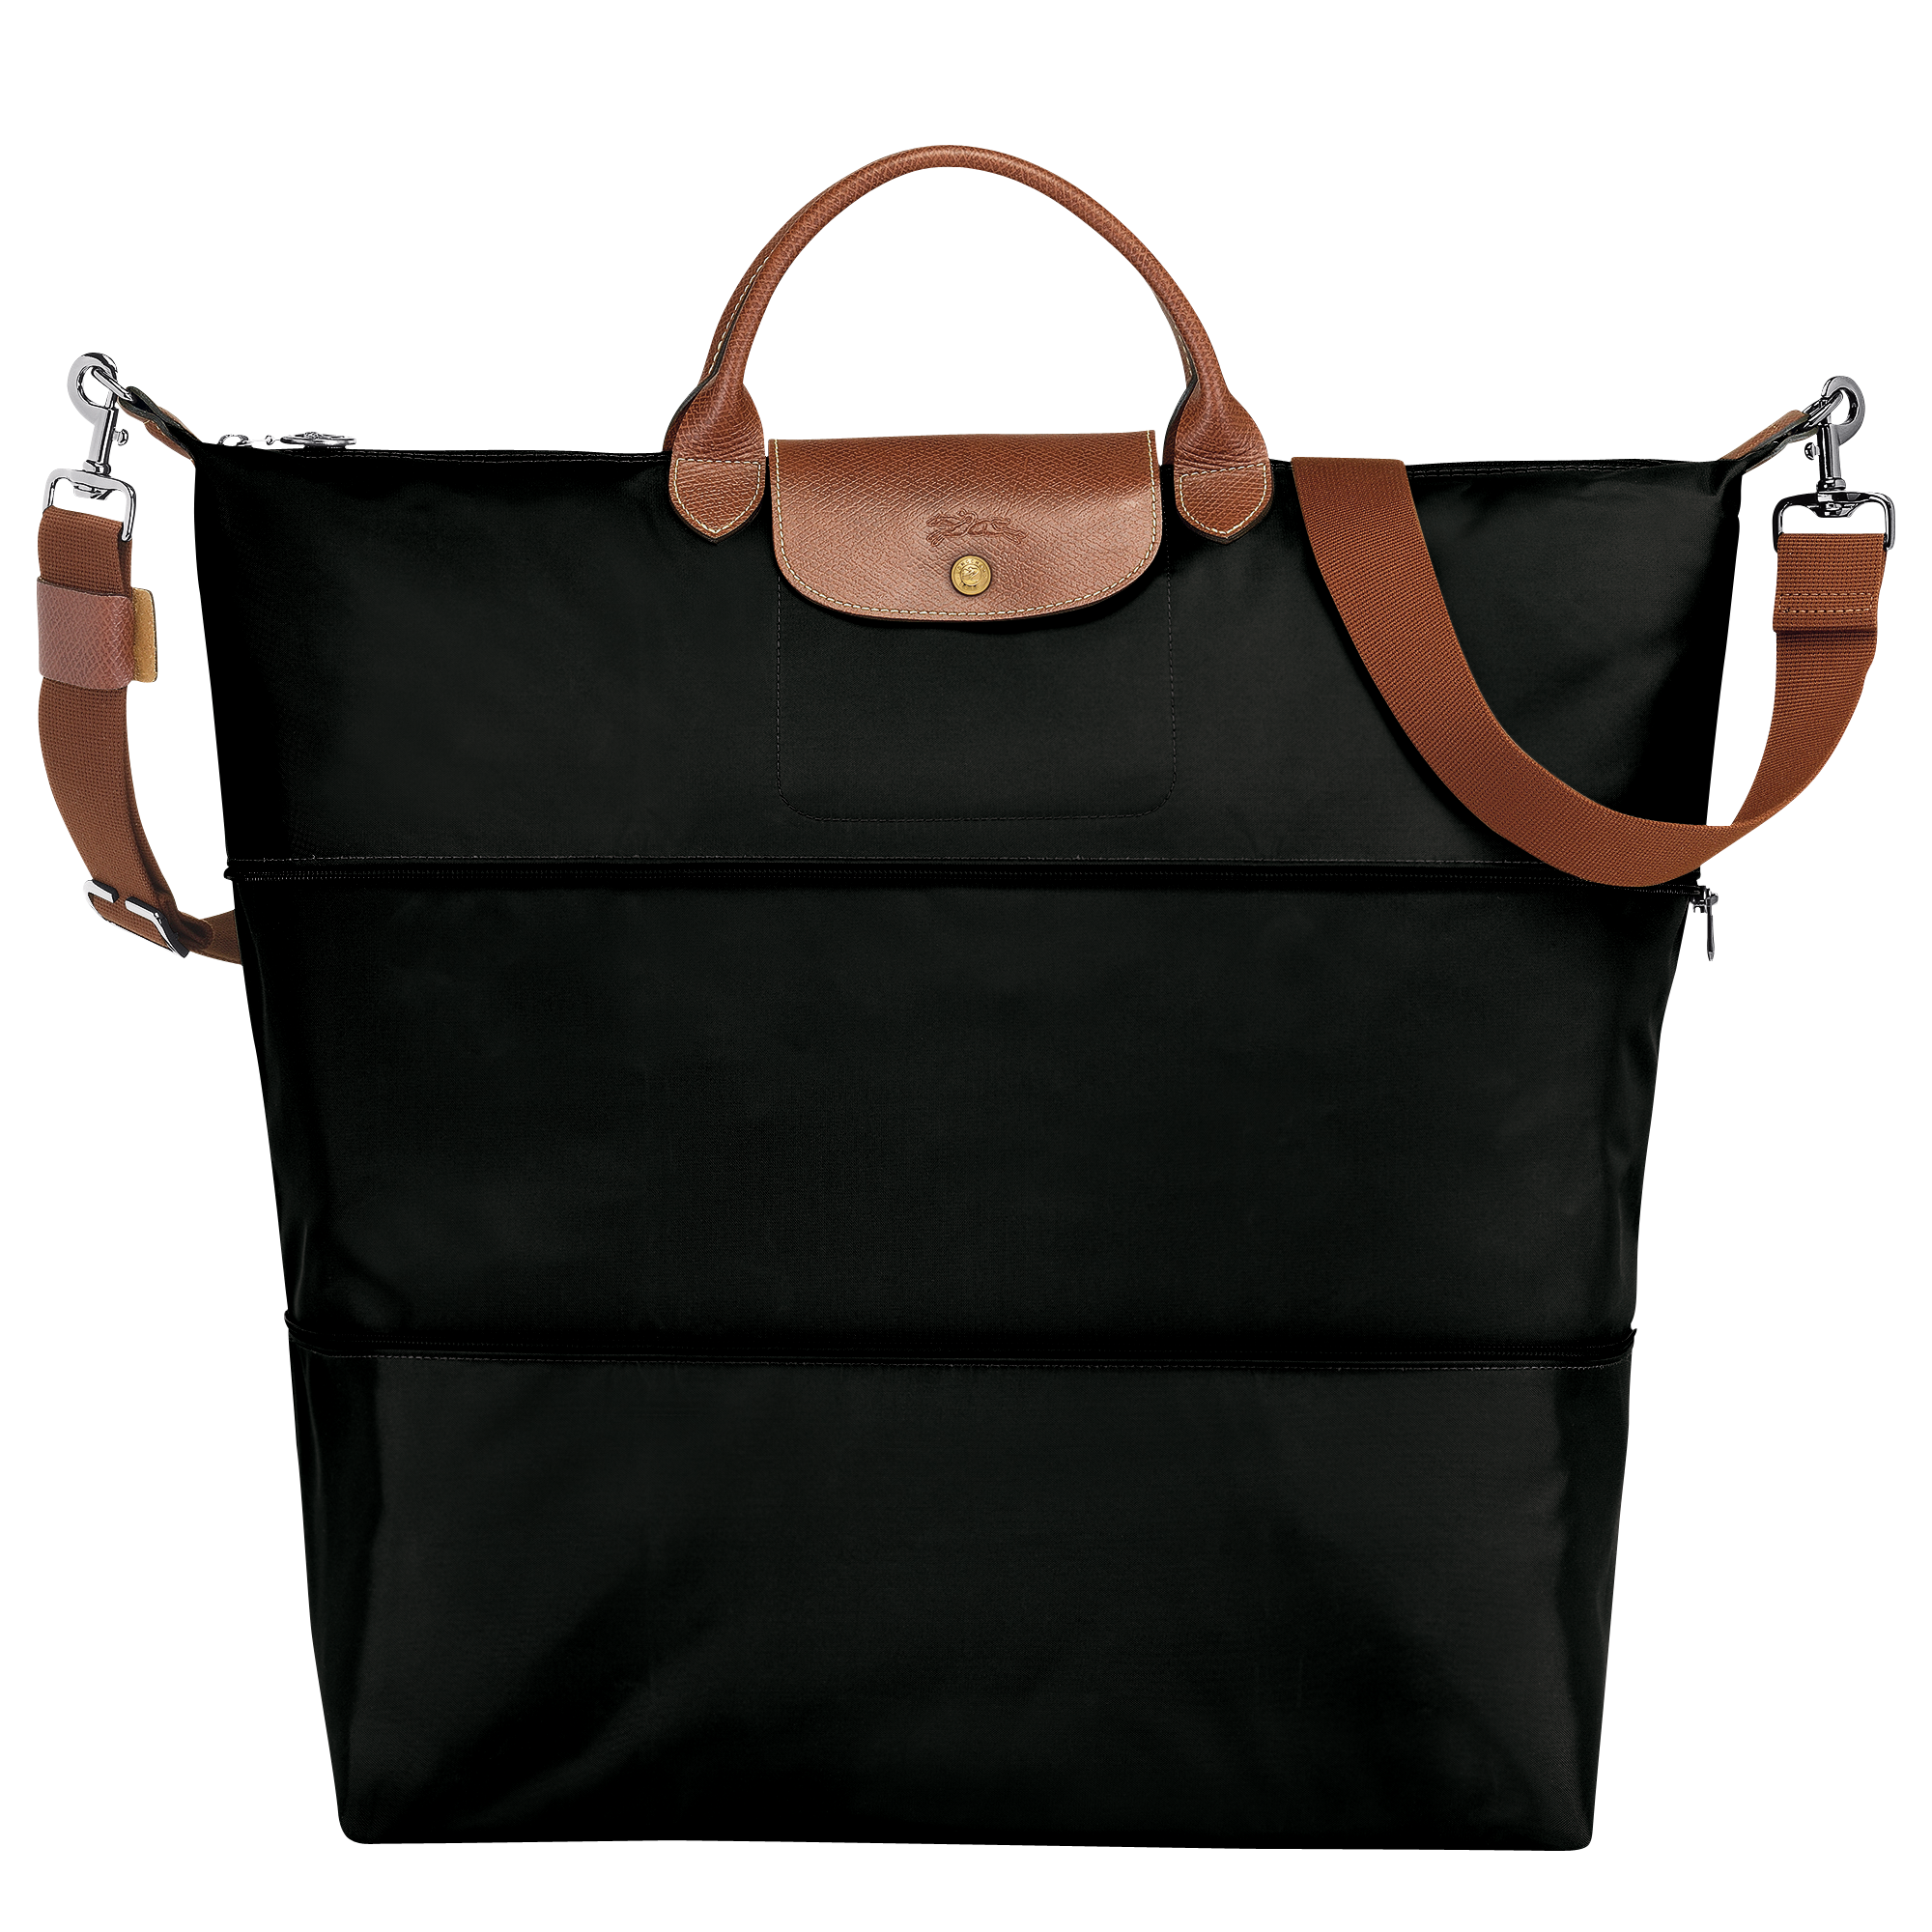 Le Pliage Travel Bag L in Black